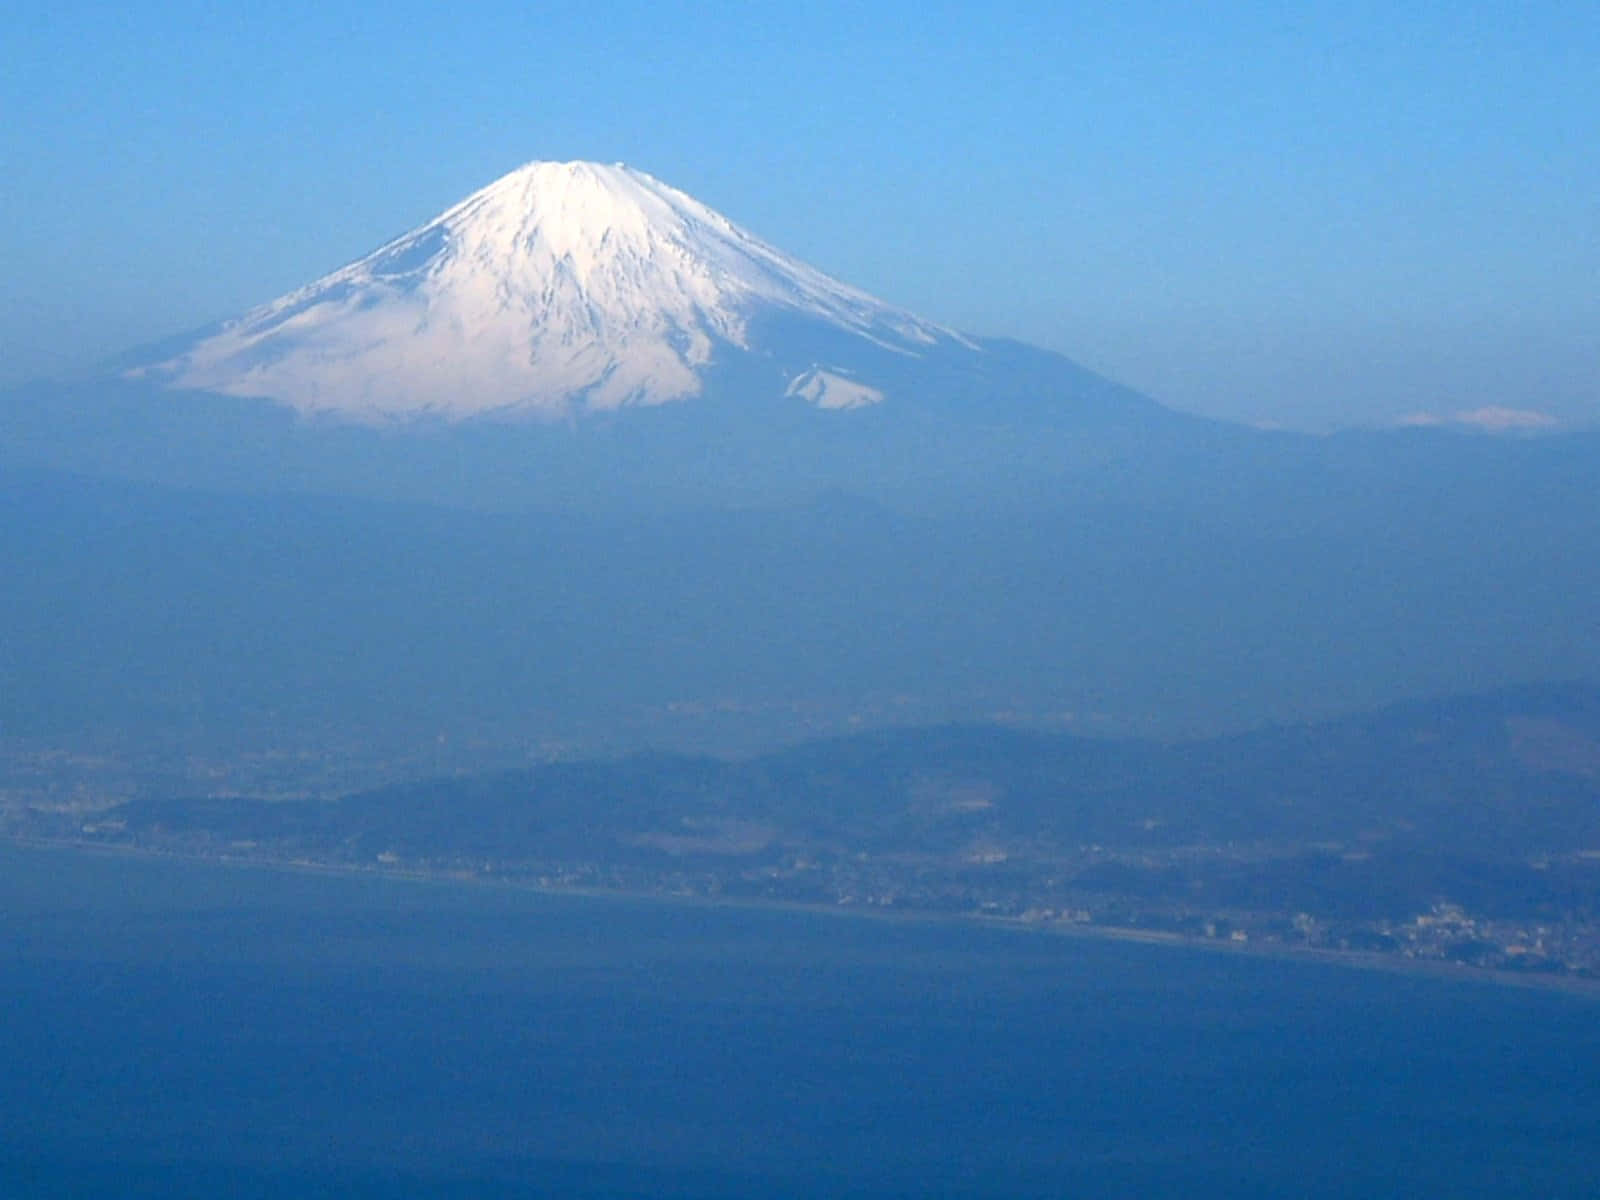 Majestic view of Mt Fuji, Japan